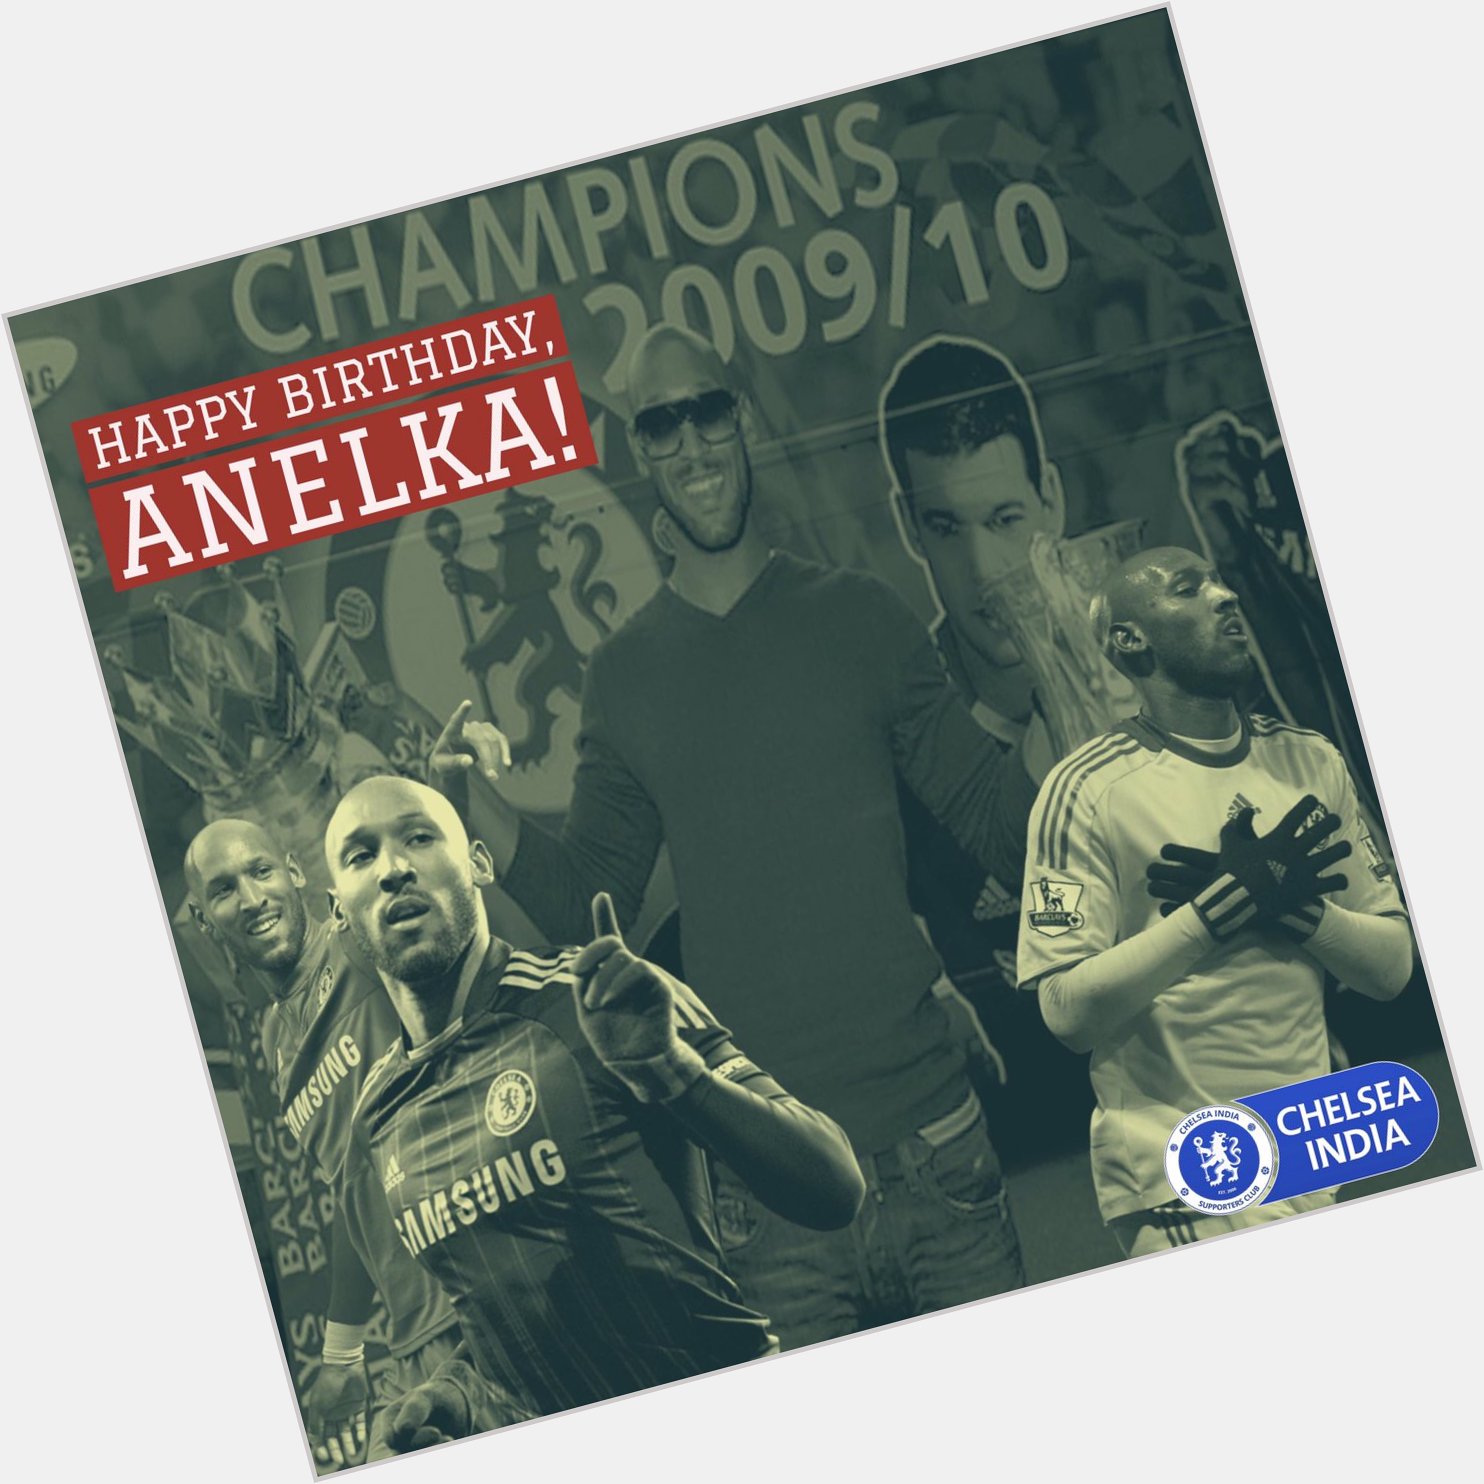 We wish a very happy birthday to former Blue Nicolas Anelka! 